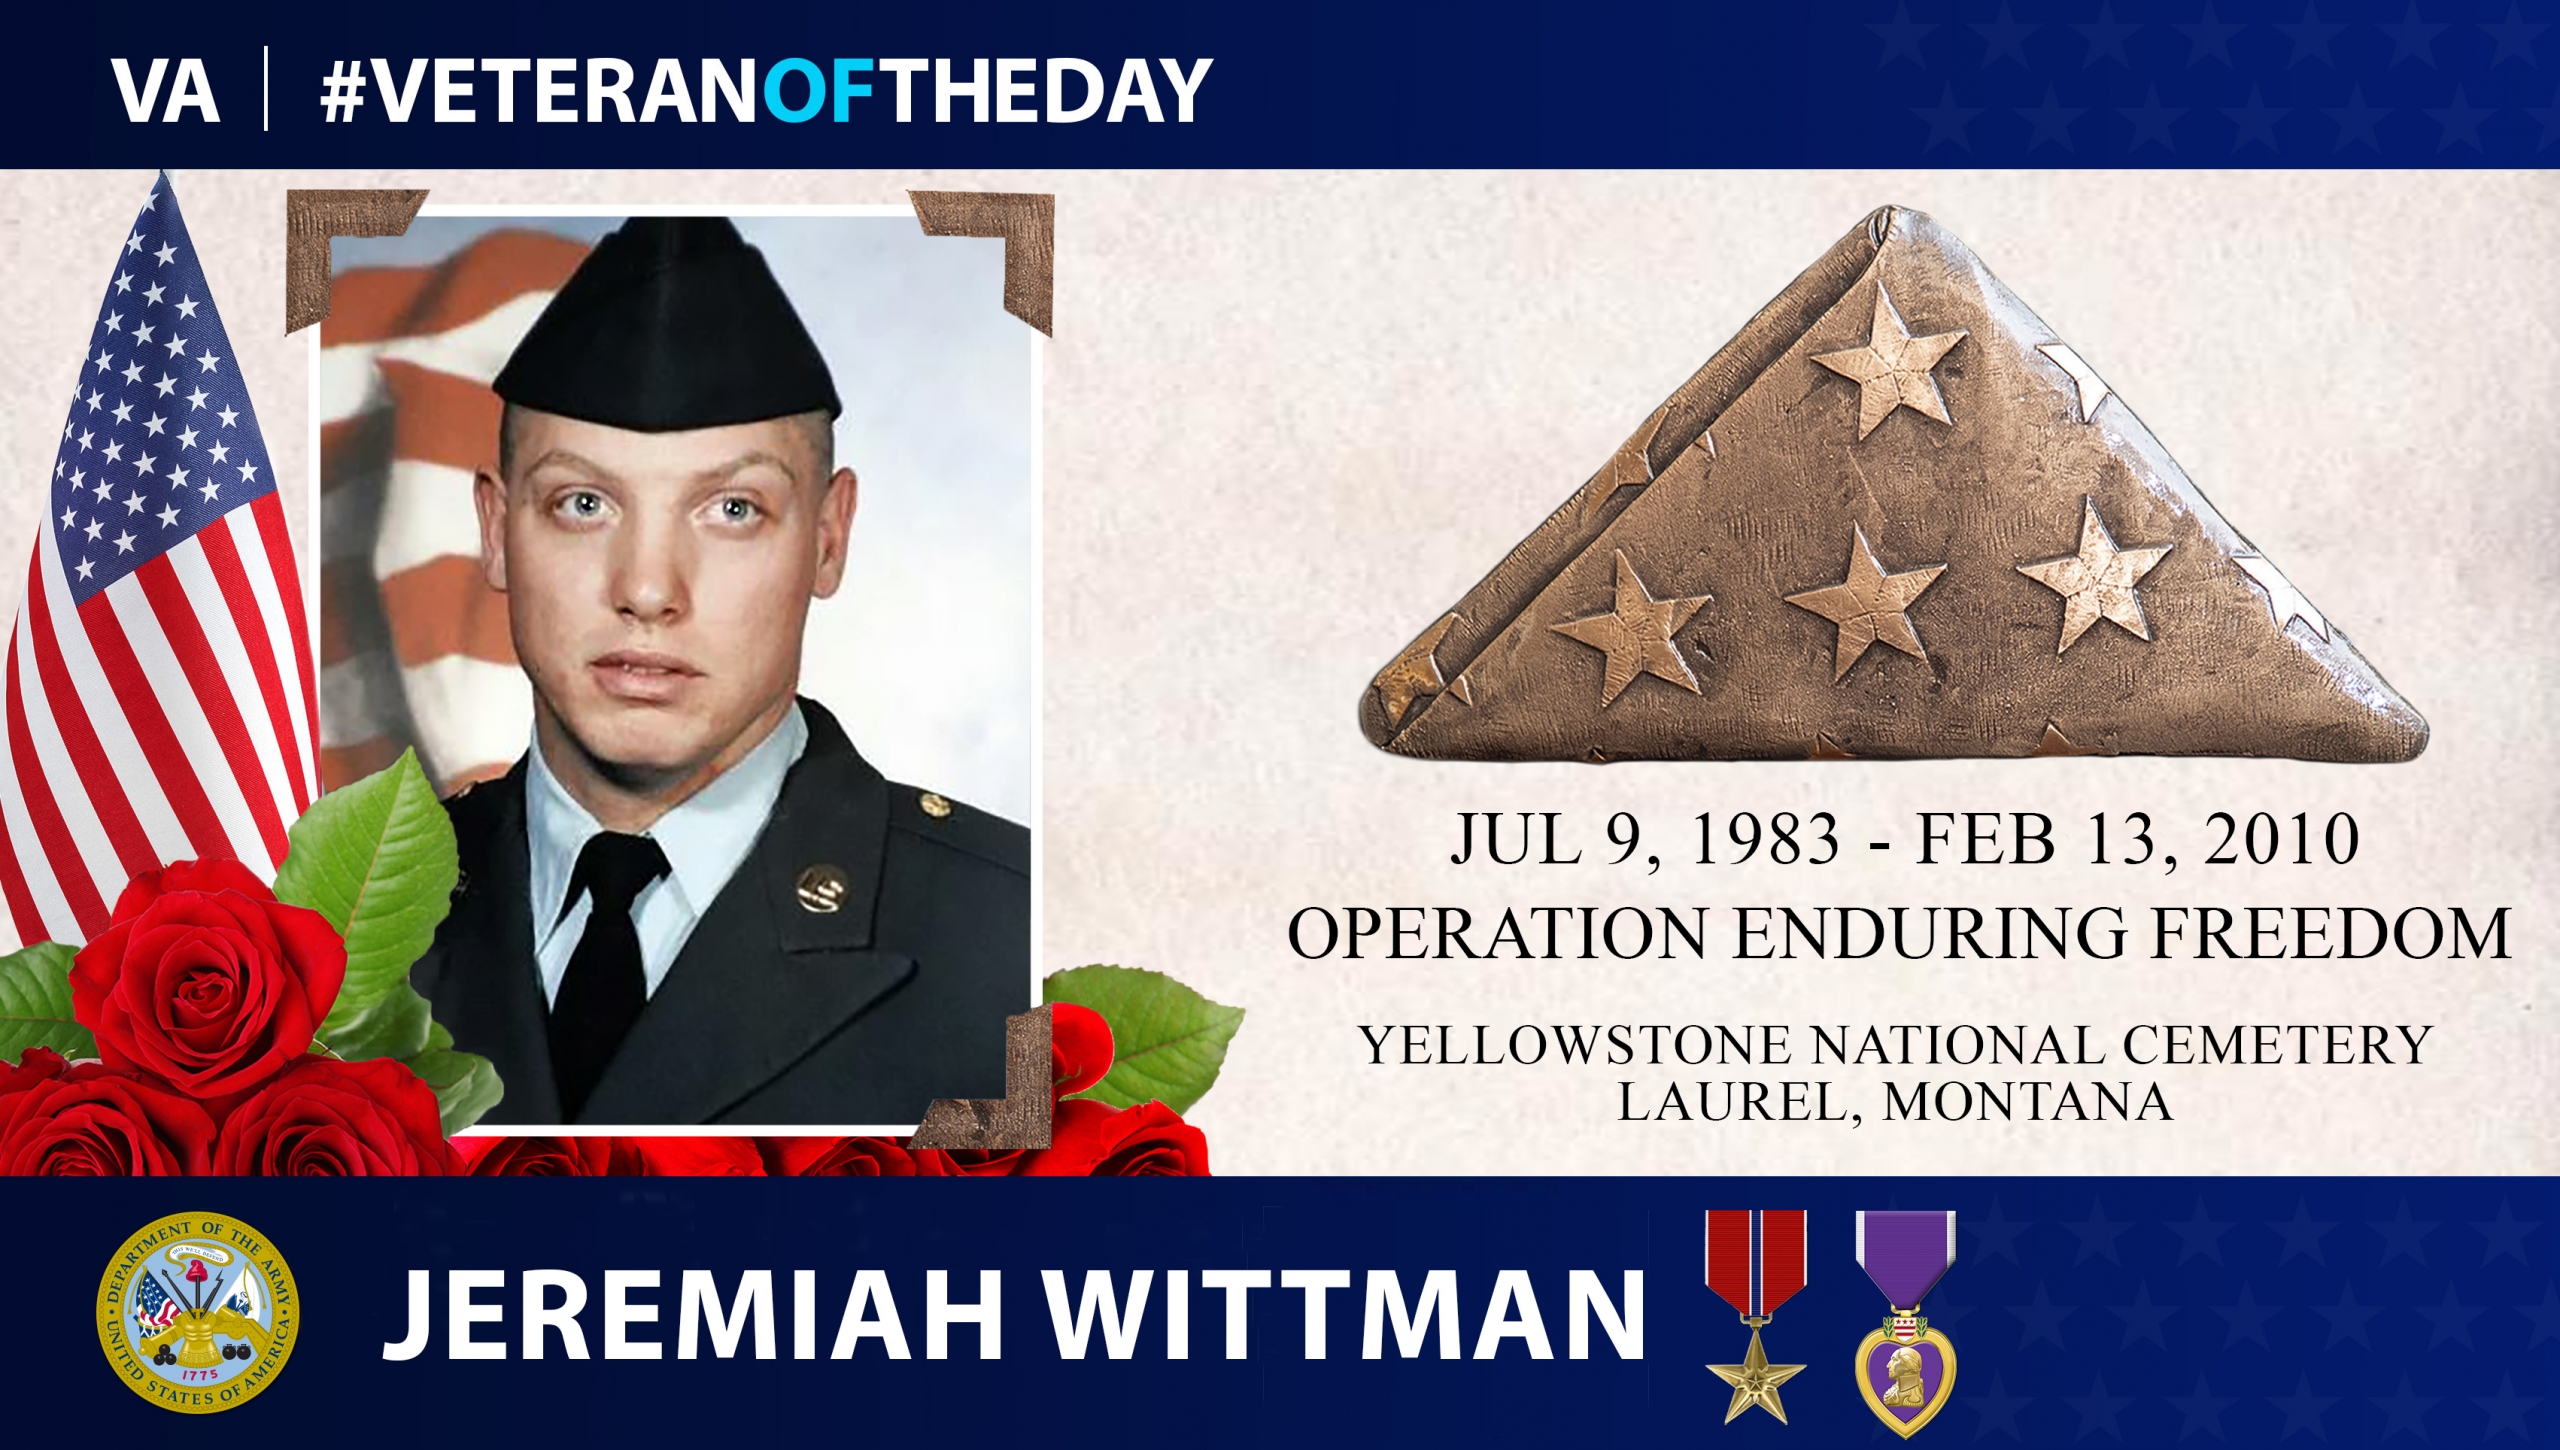 Army Veteran Jeremiah Thomas Wittman is today’s Veteran of the Day.